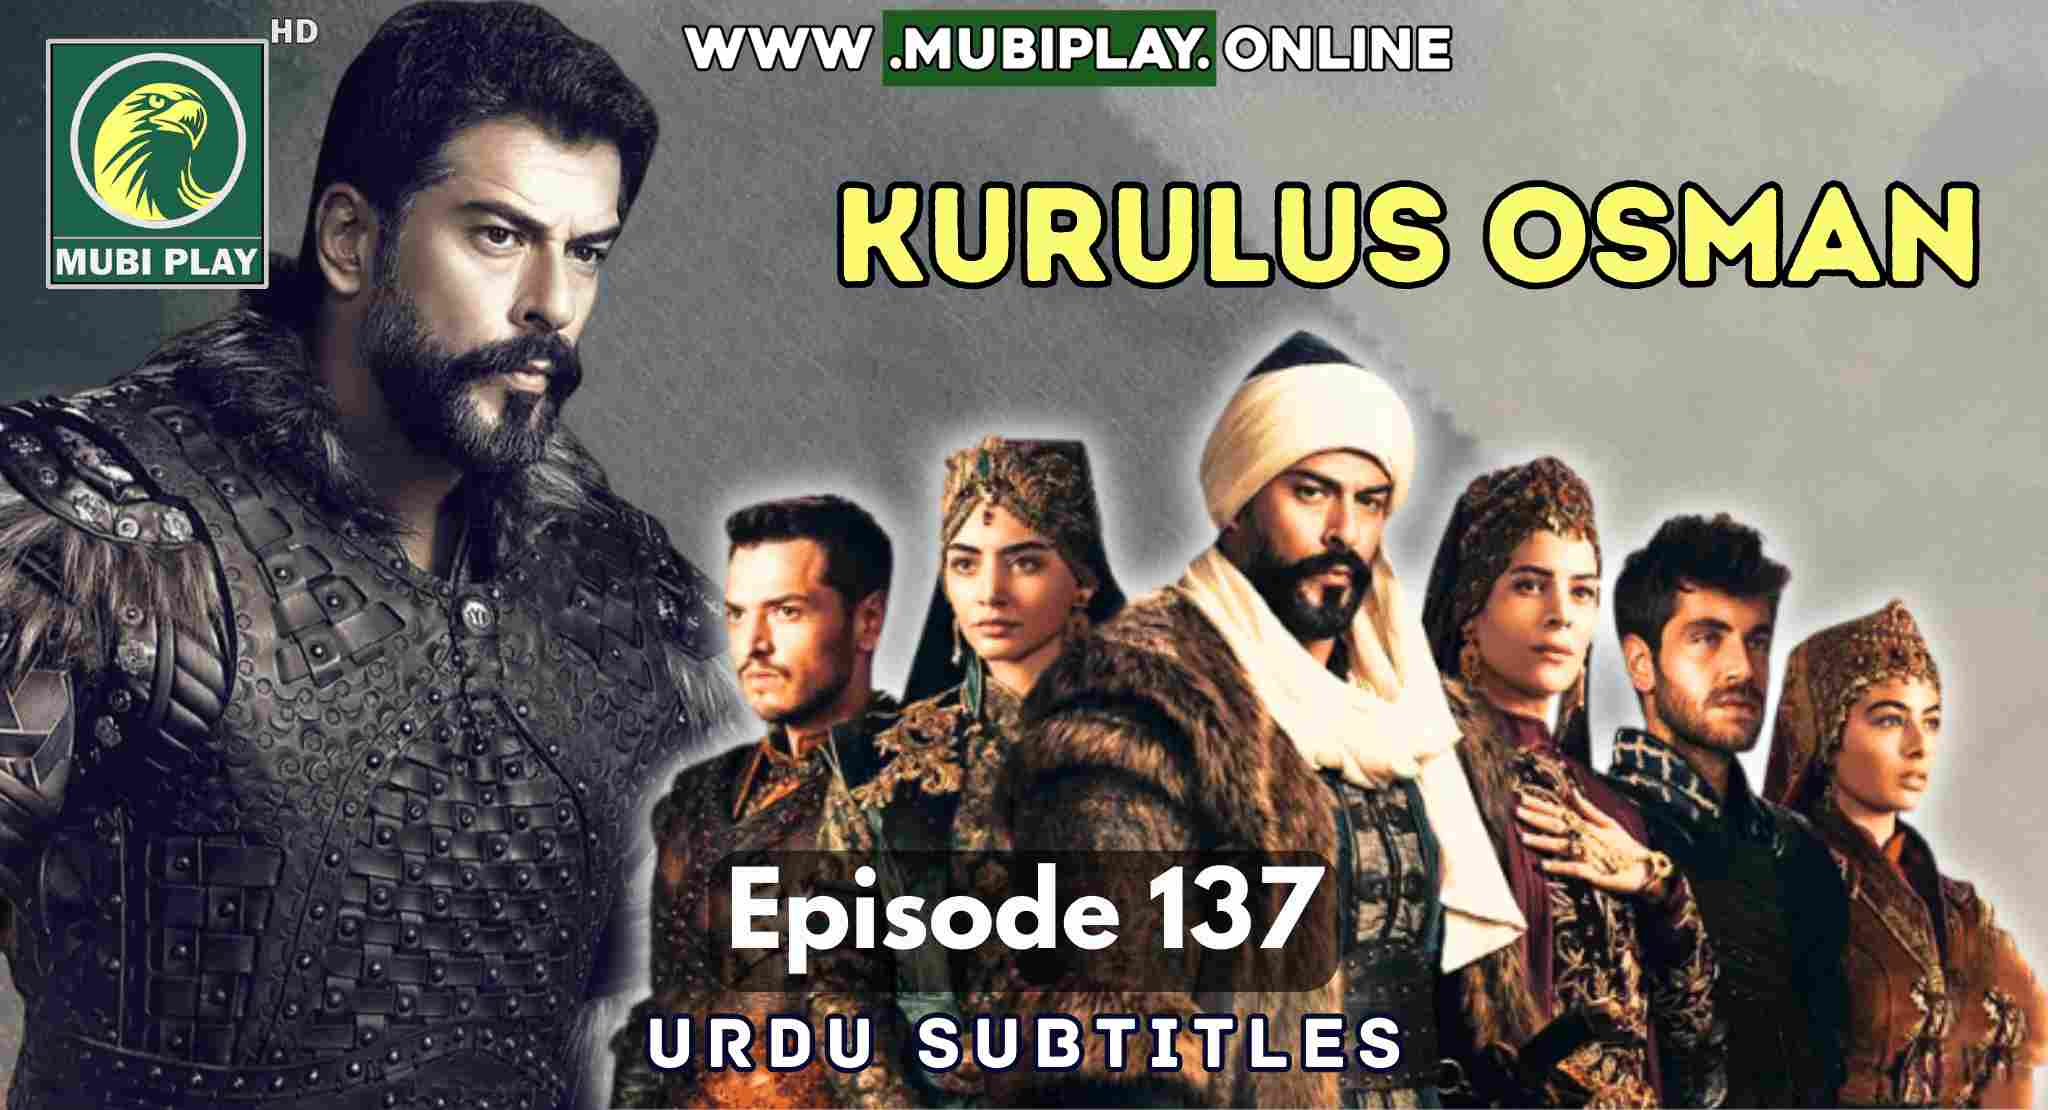 Kurulus Osman Episode 137 with Urdu Subtitles by Mubi Play